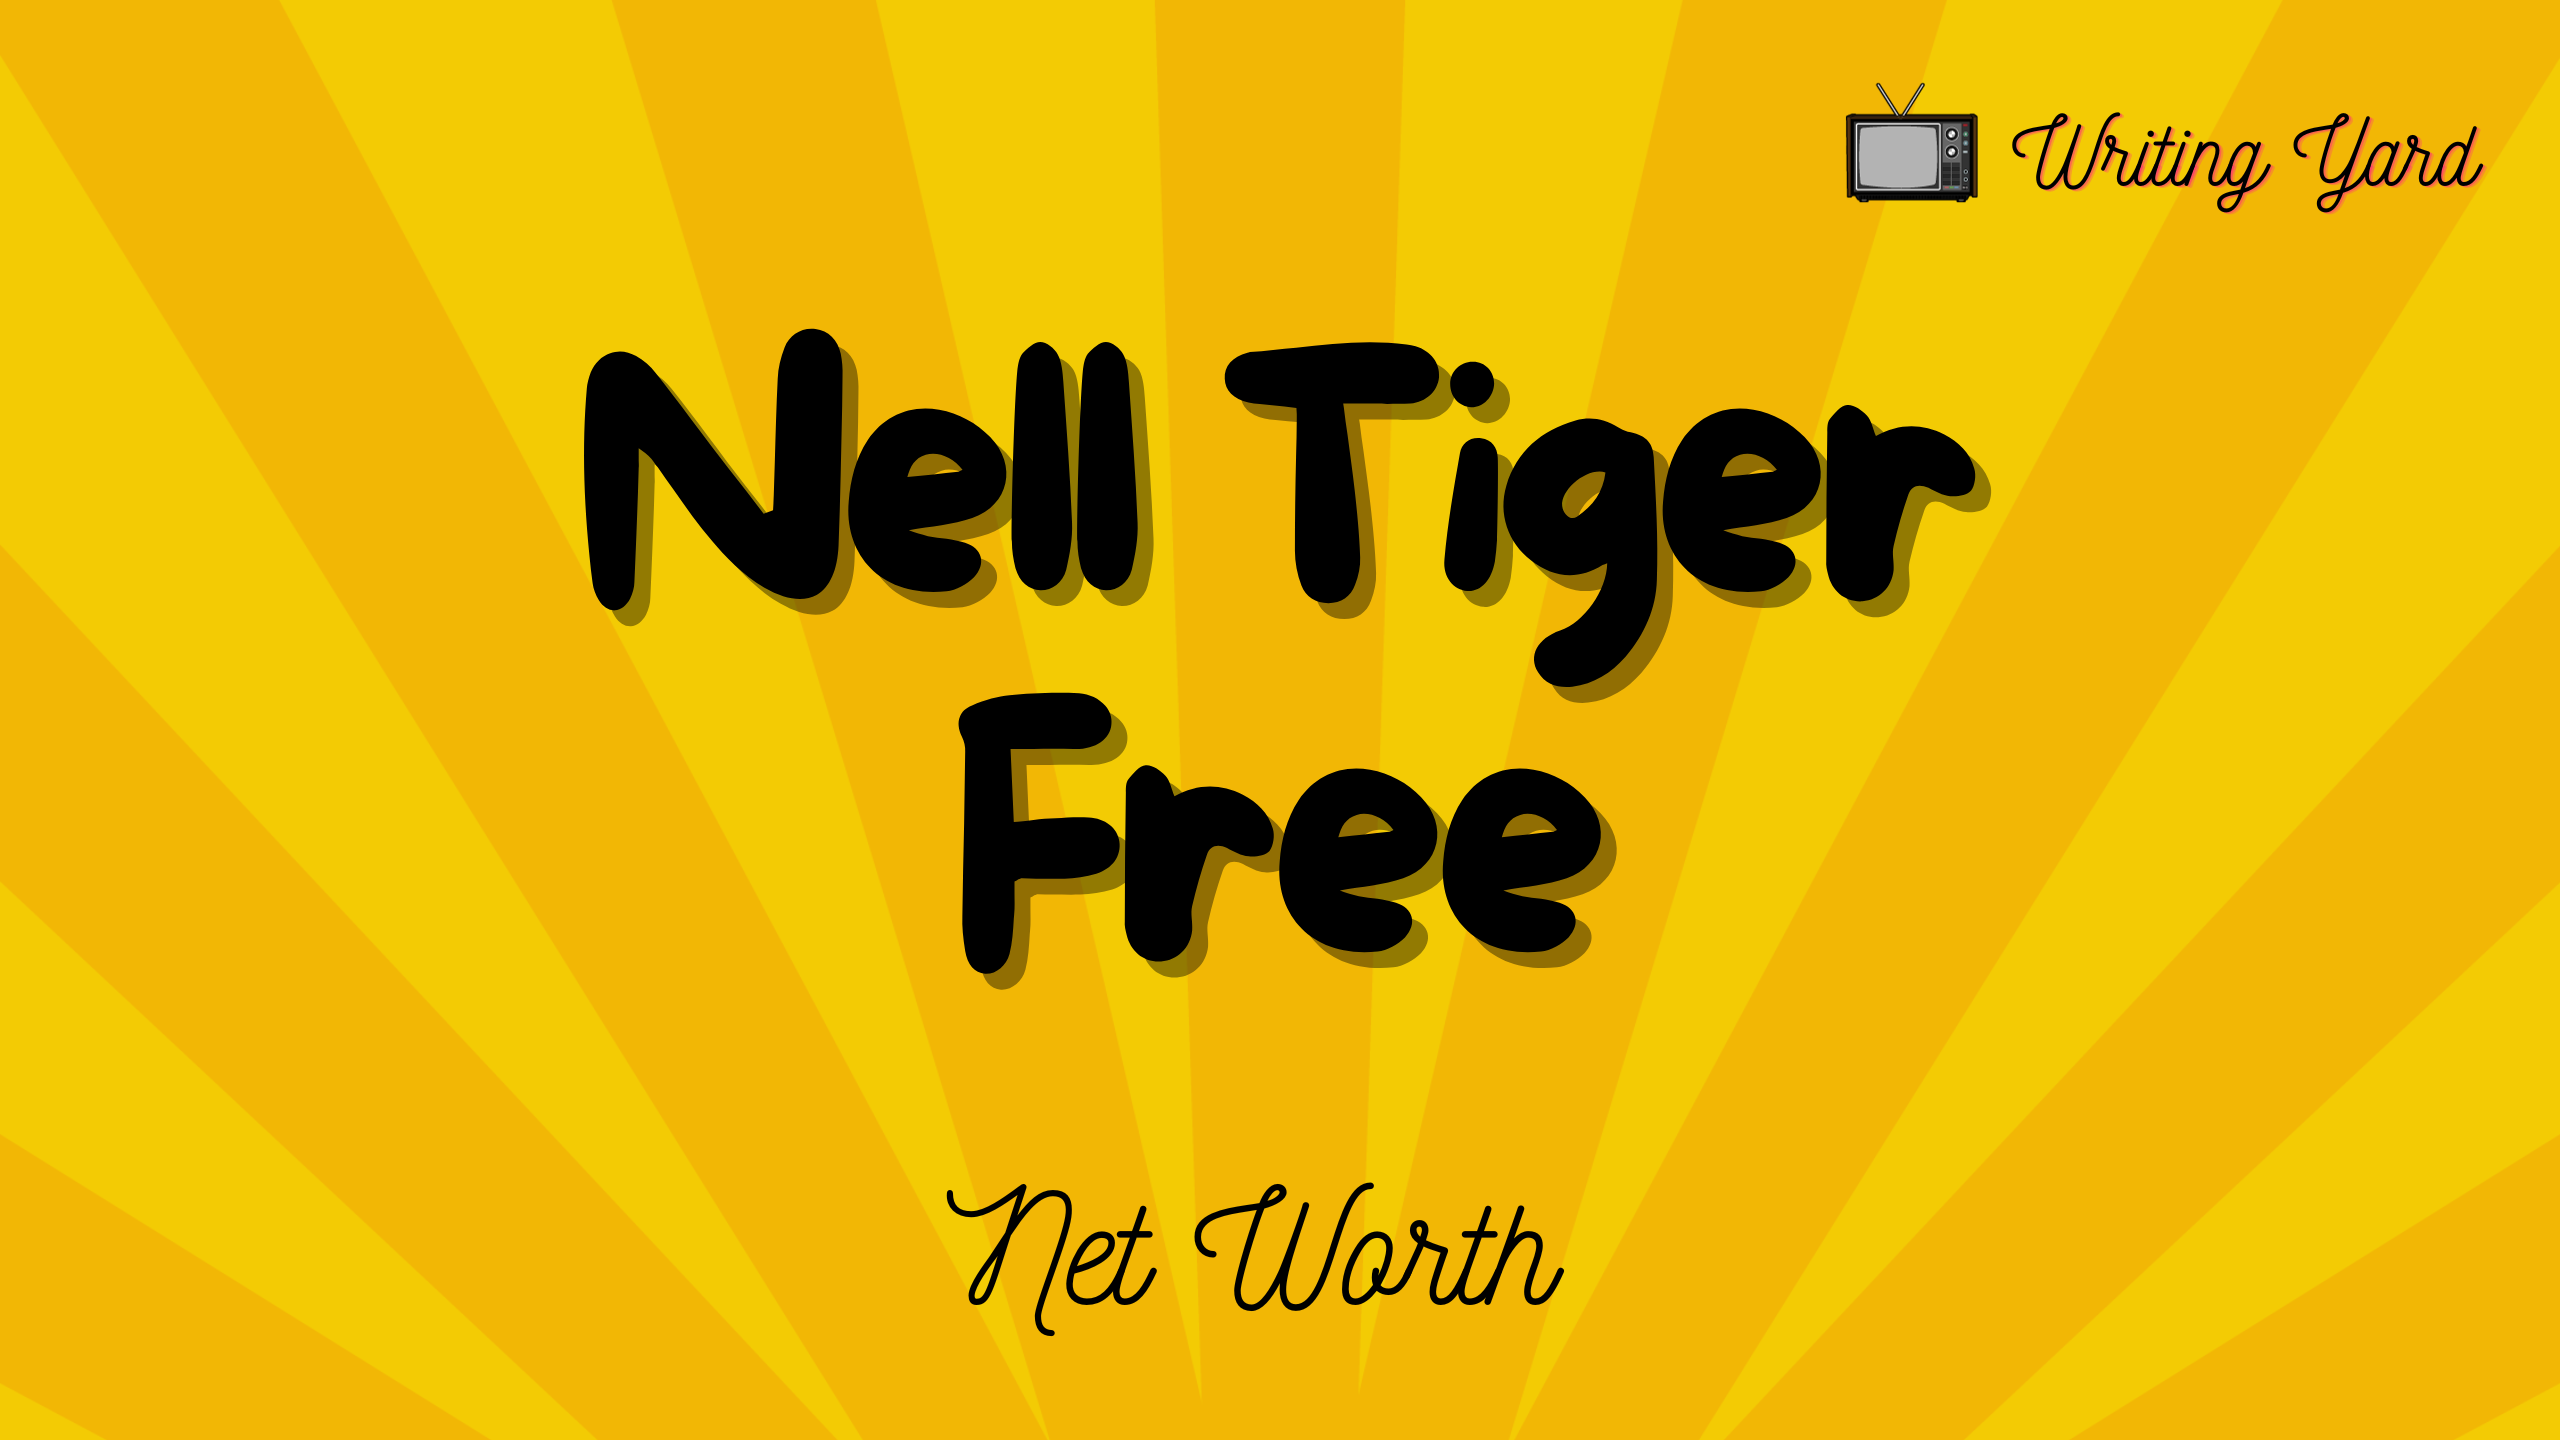 Nell Tiger Free Net Worth